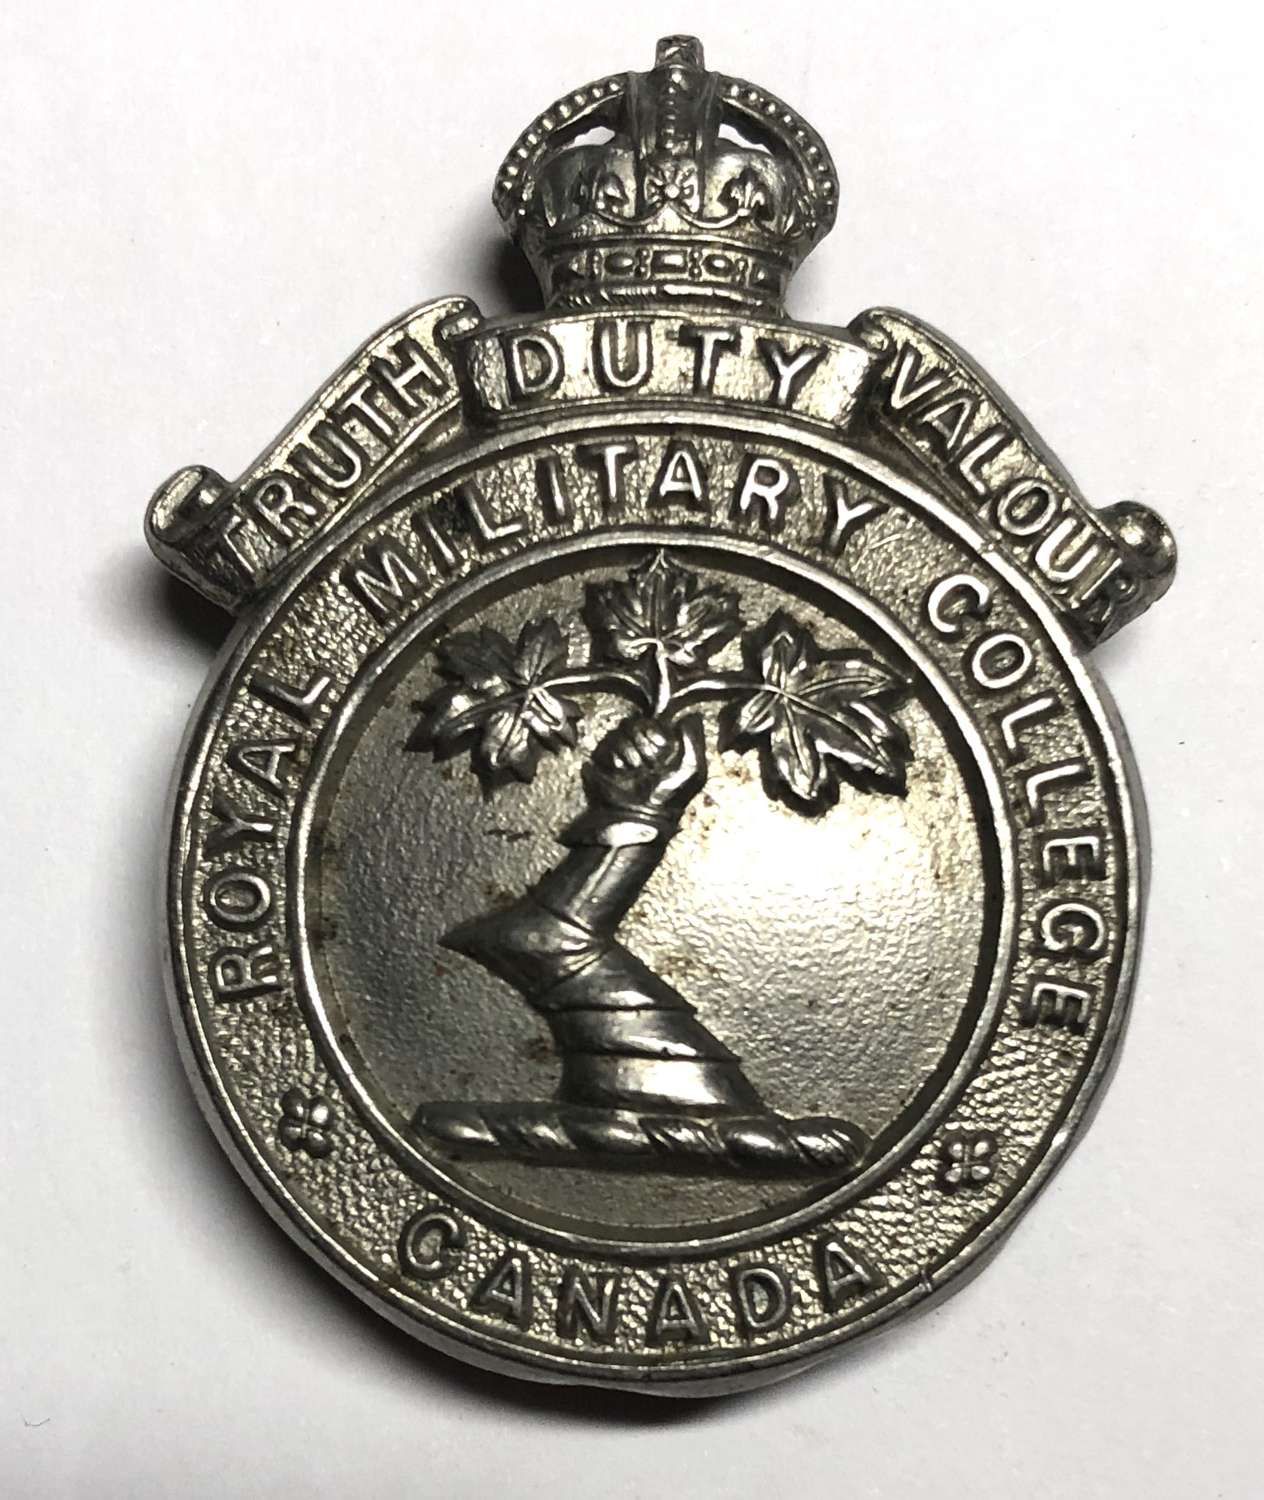 Canadian Royal Military College cap badge